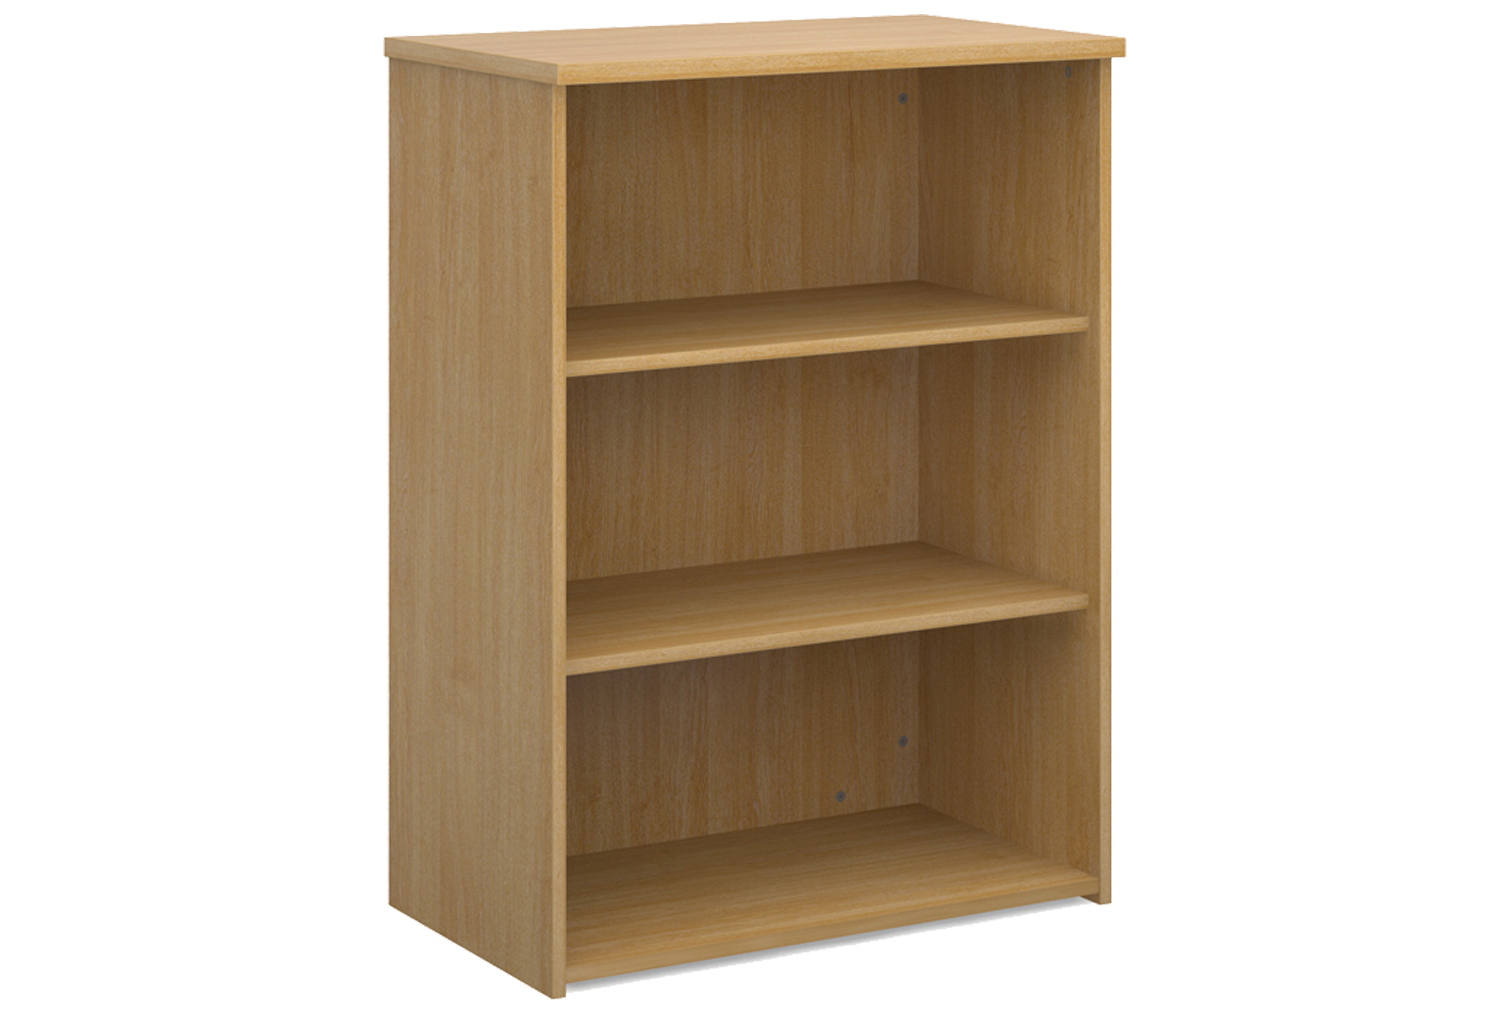 All Oak Office Bookcases, 2 Shelf - 80wx47dx109h (cm)